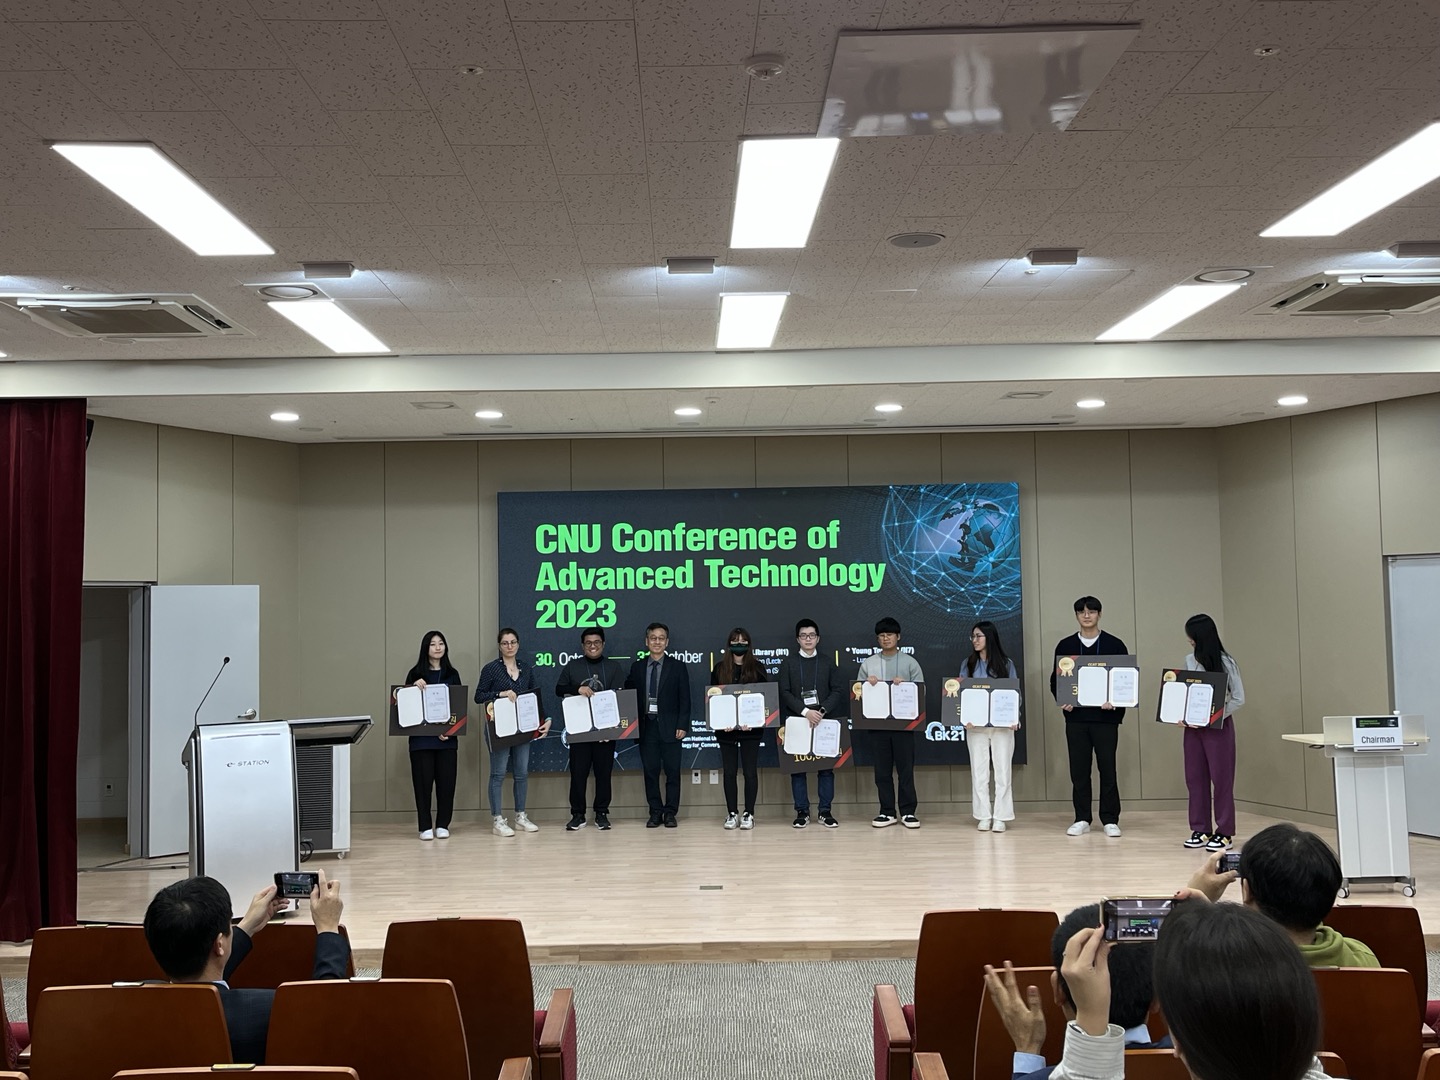 CNU Conference of Advanced Technology 2023 (CCAT 2023)